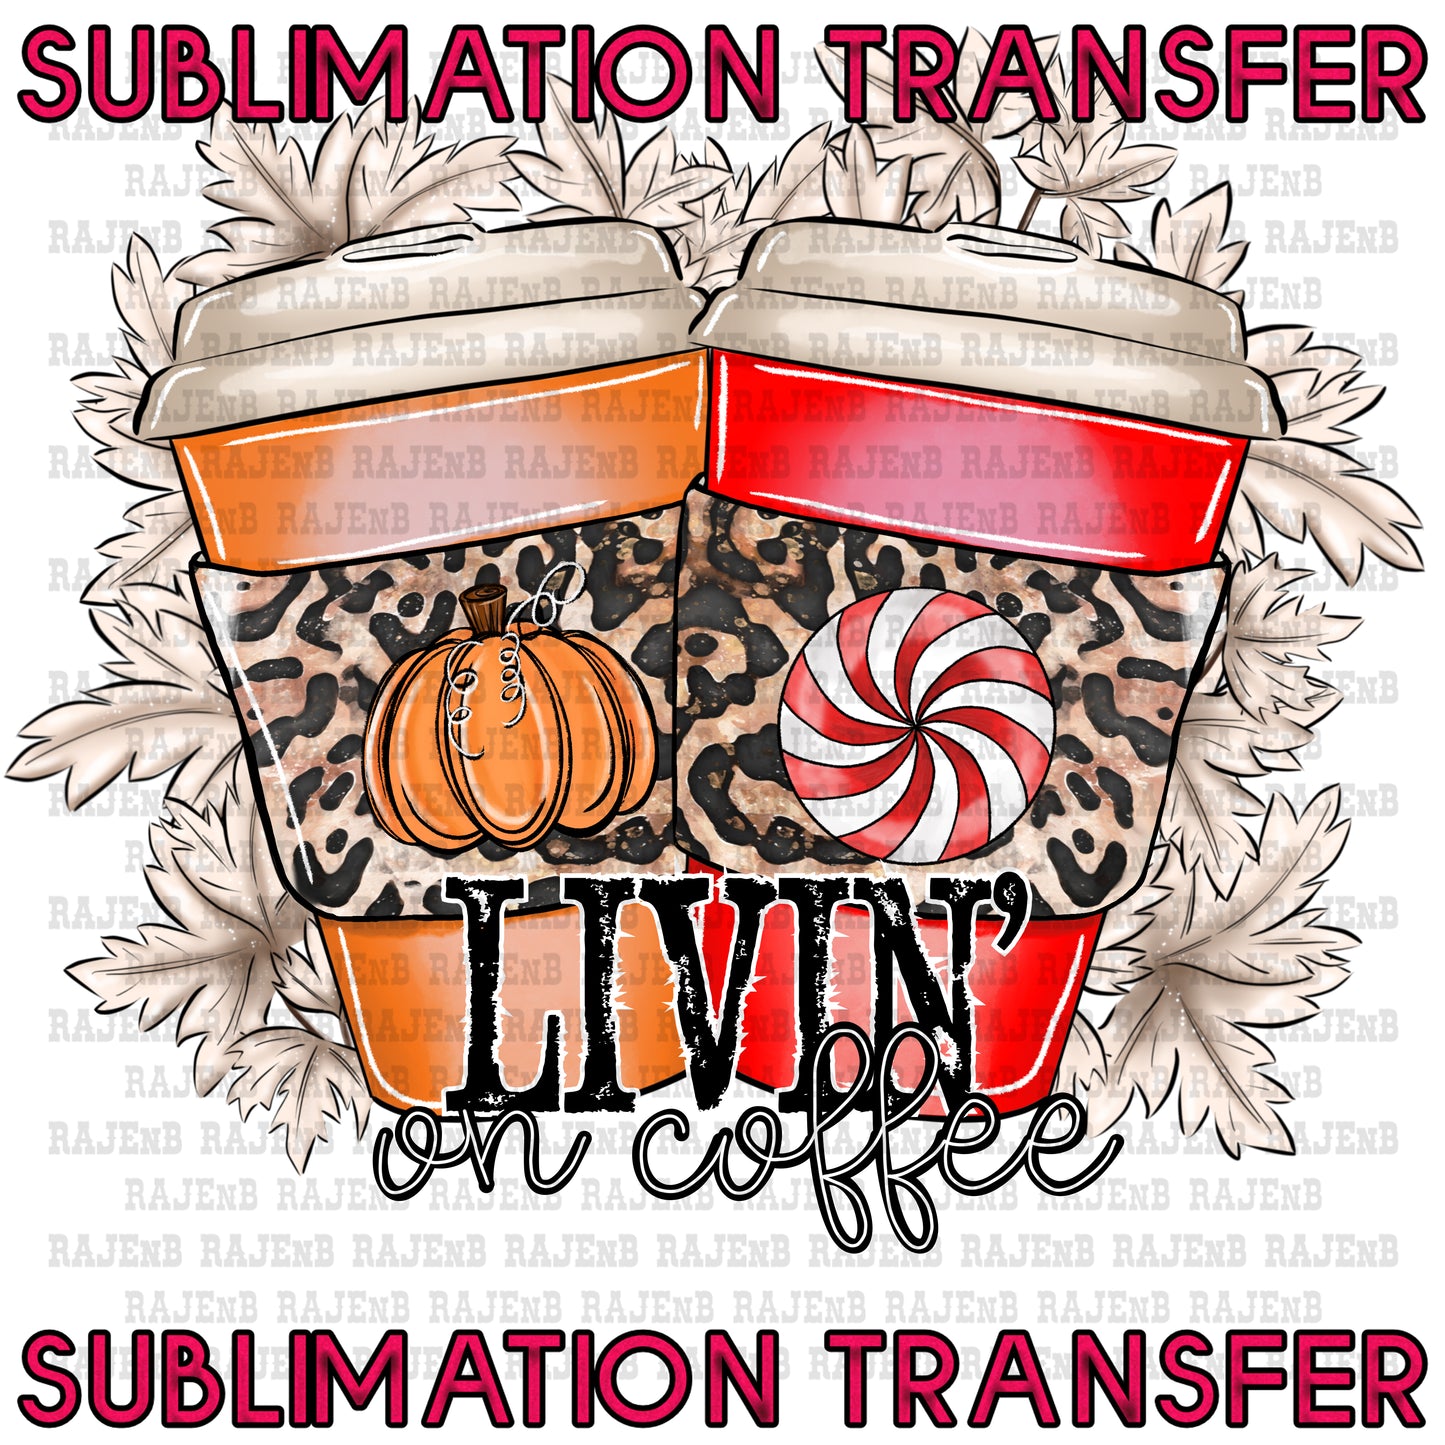 Livin on Coffee - SUBLIMATION TRANSFER 4131SUB